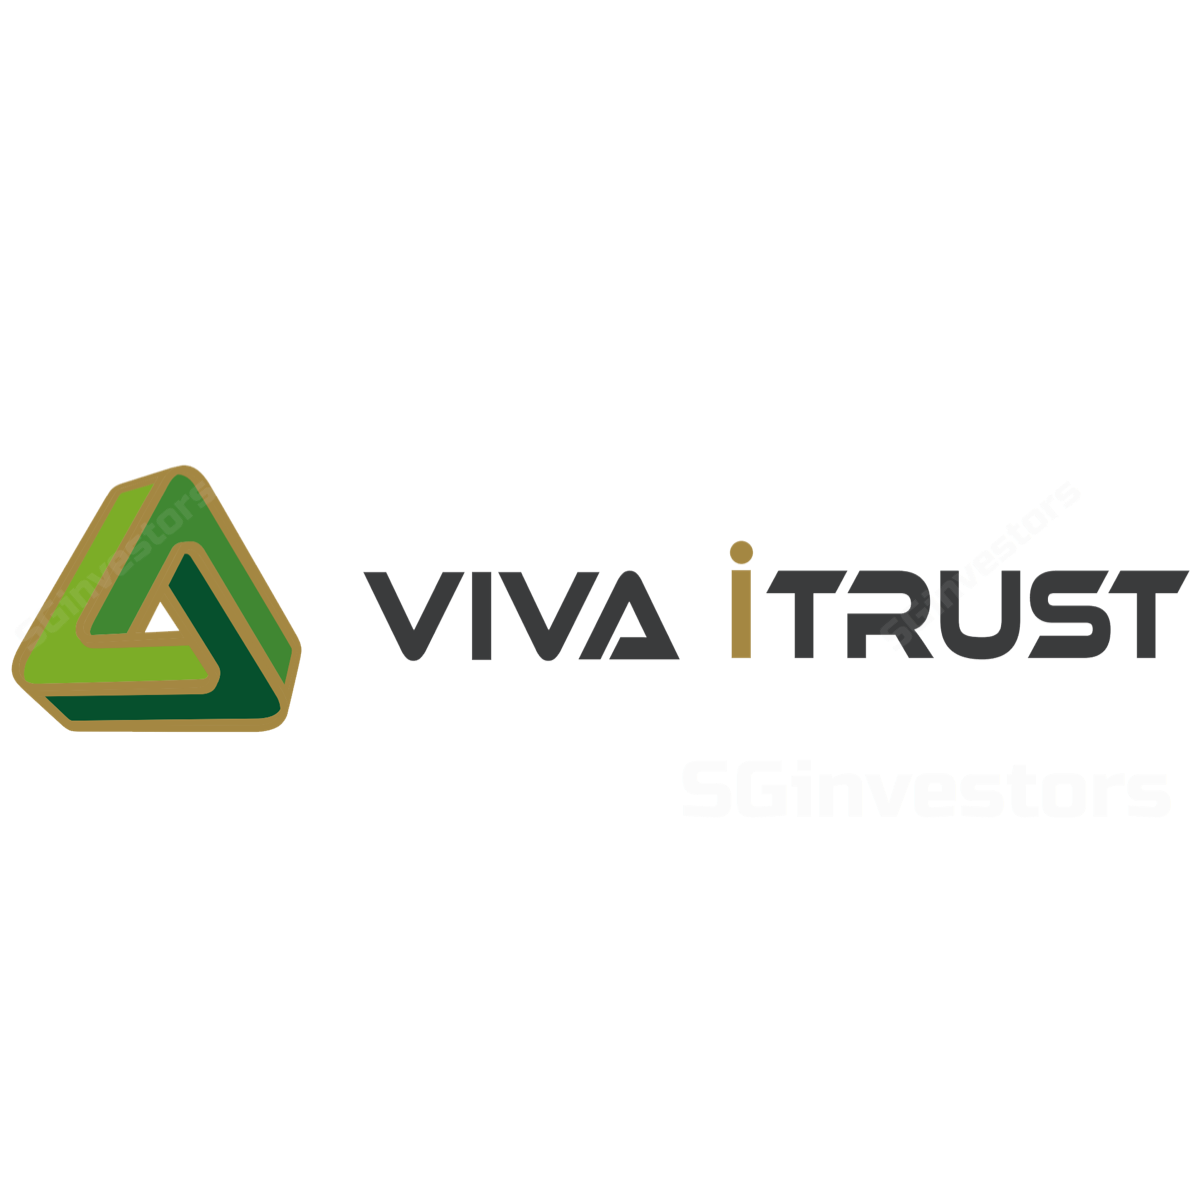 Viva Industrial Trust (VIV SP) - Maybank Kim Eng 2017-05-02: A Strong Start